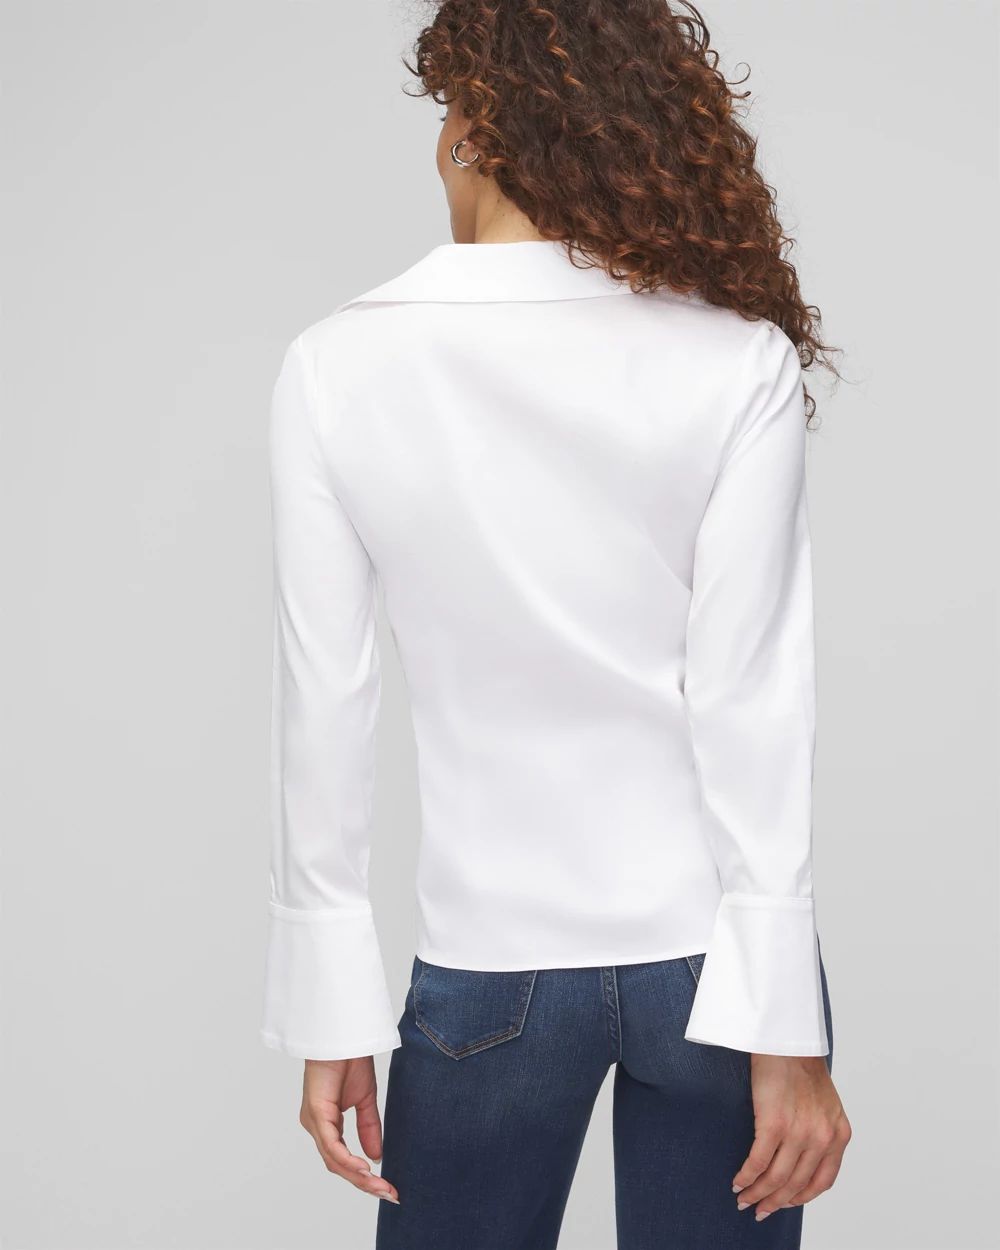 Petite Long Sleeve Twist Poplin Shirt click to view larger image.